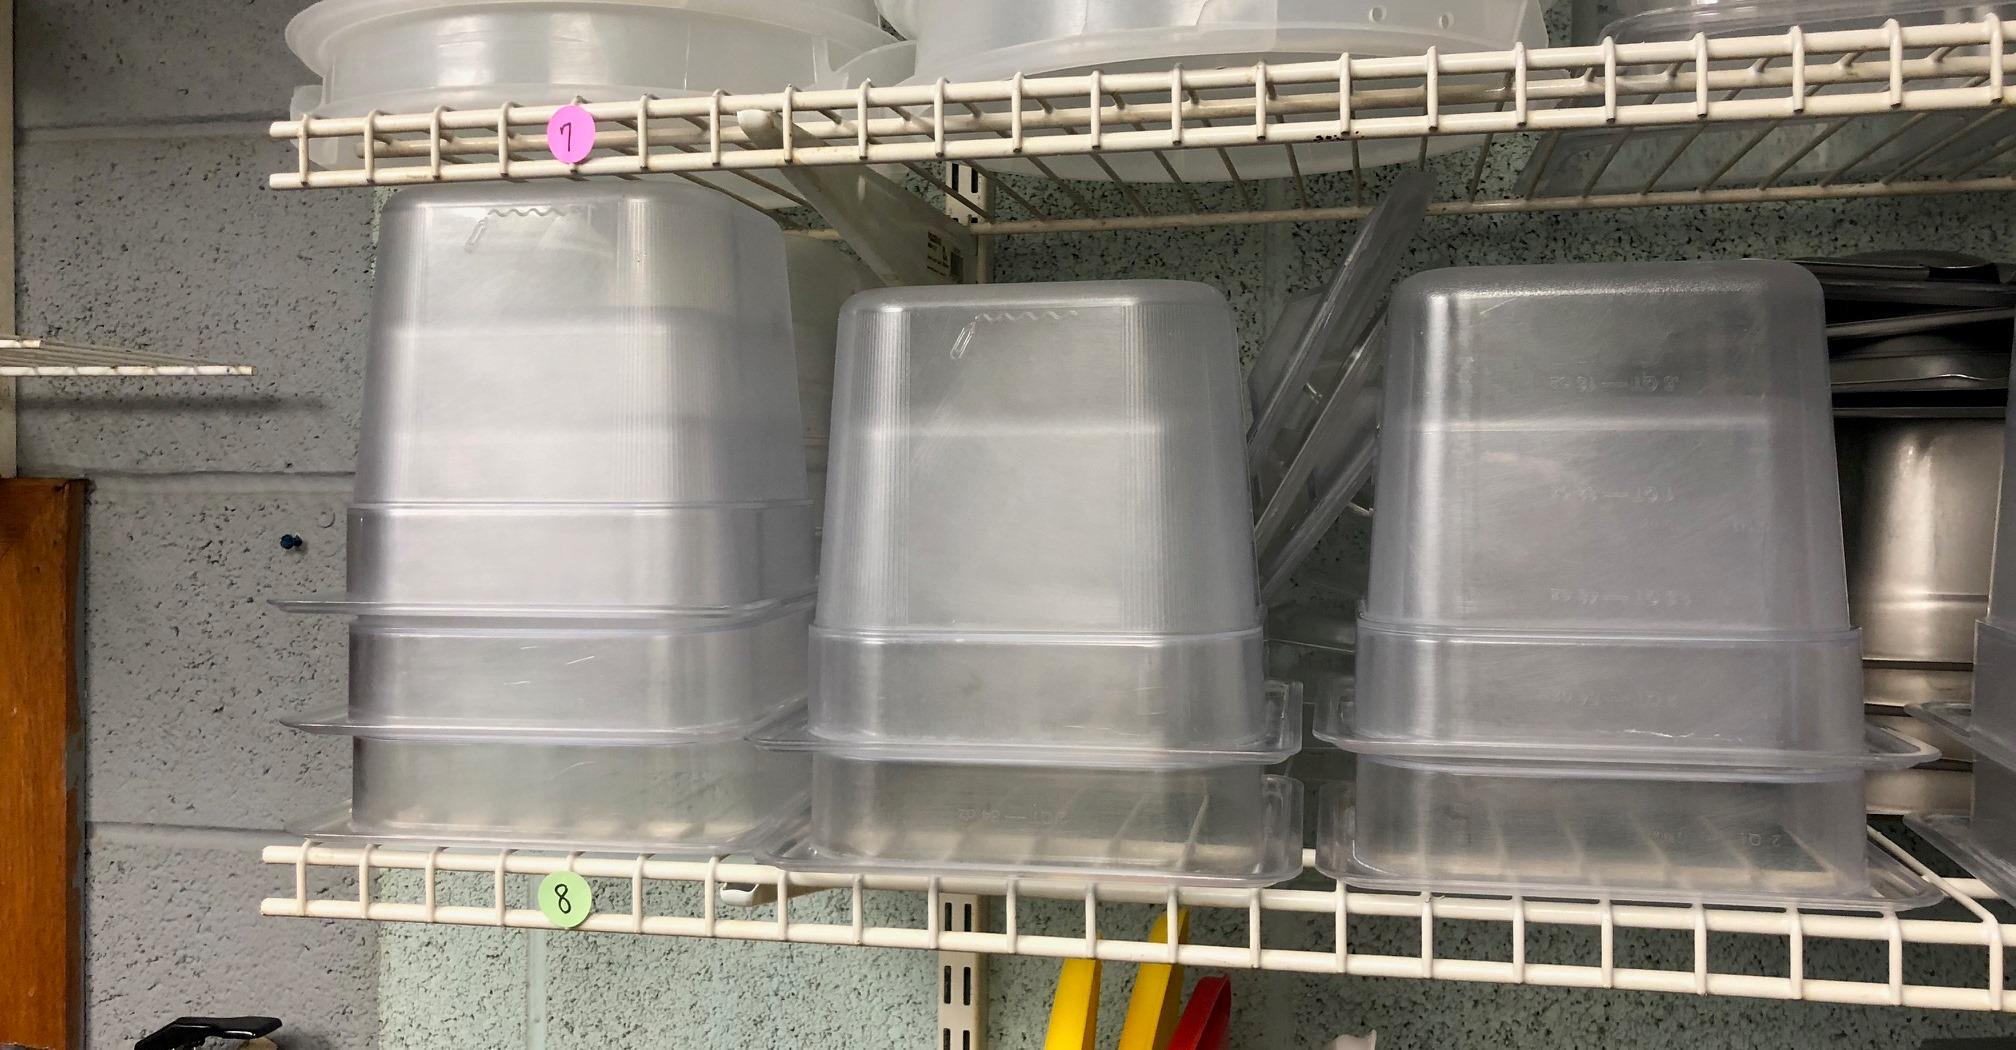 Third Shelf of pans, trays, etc. - mostly plastic